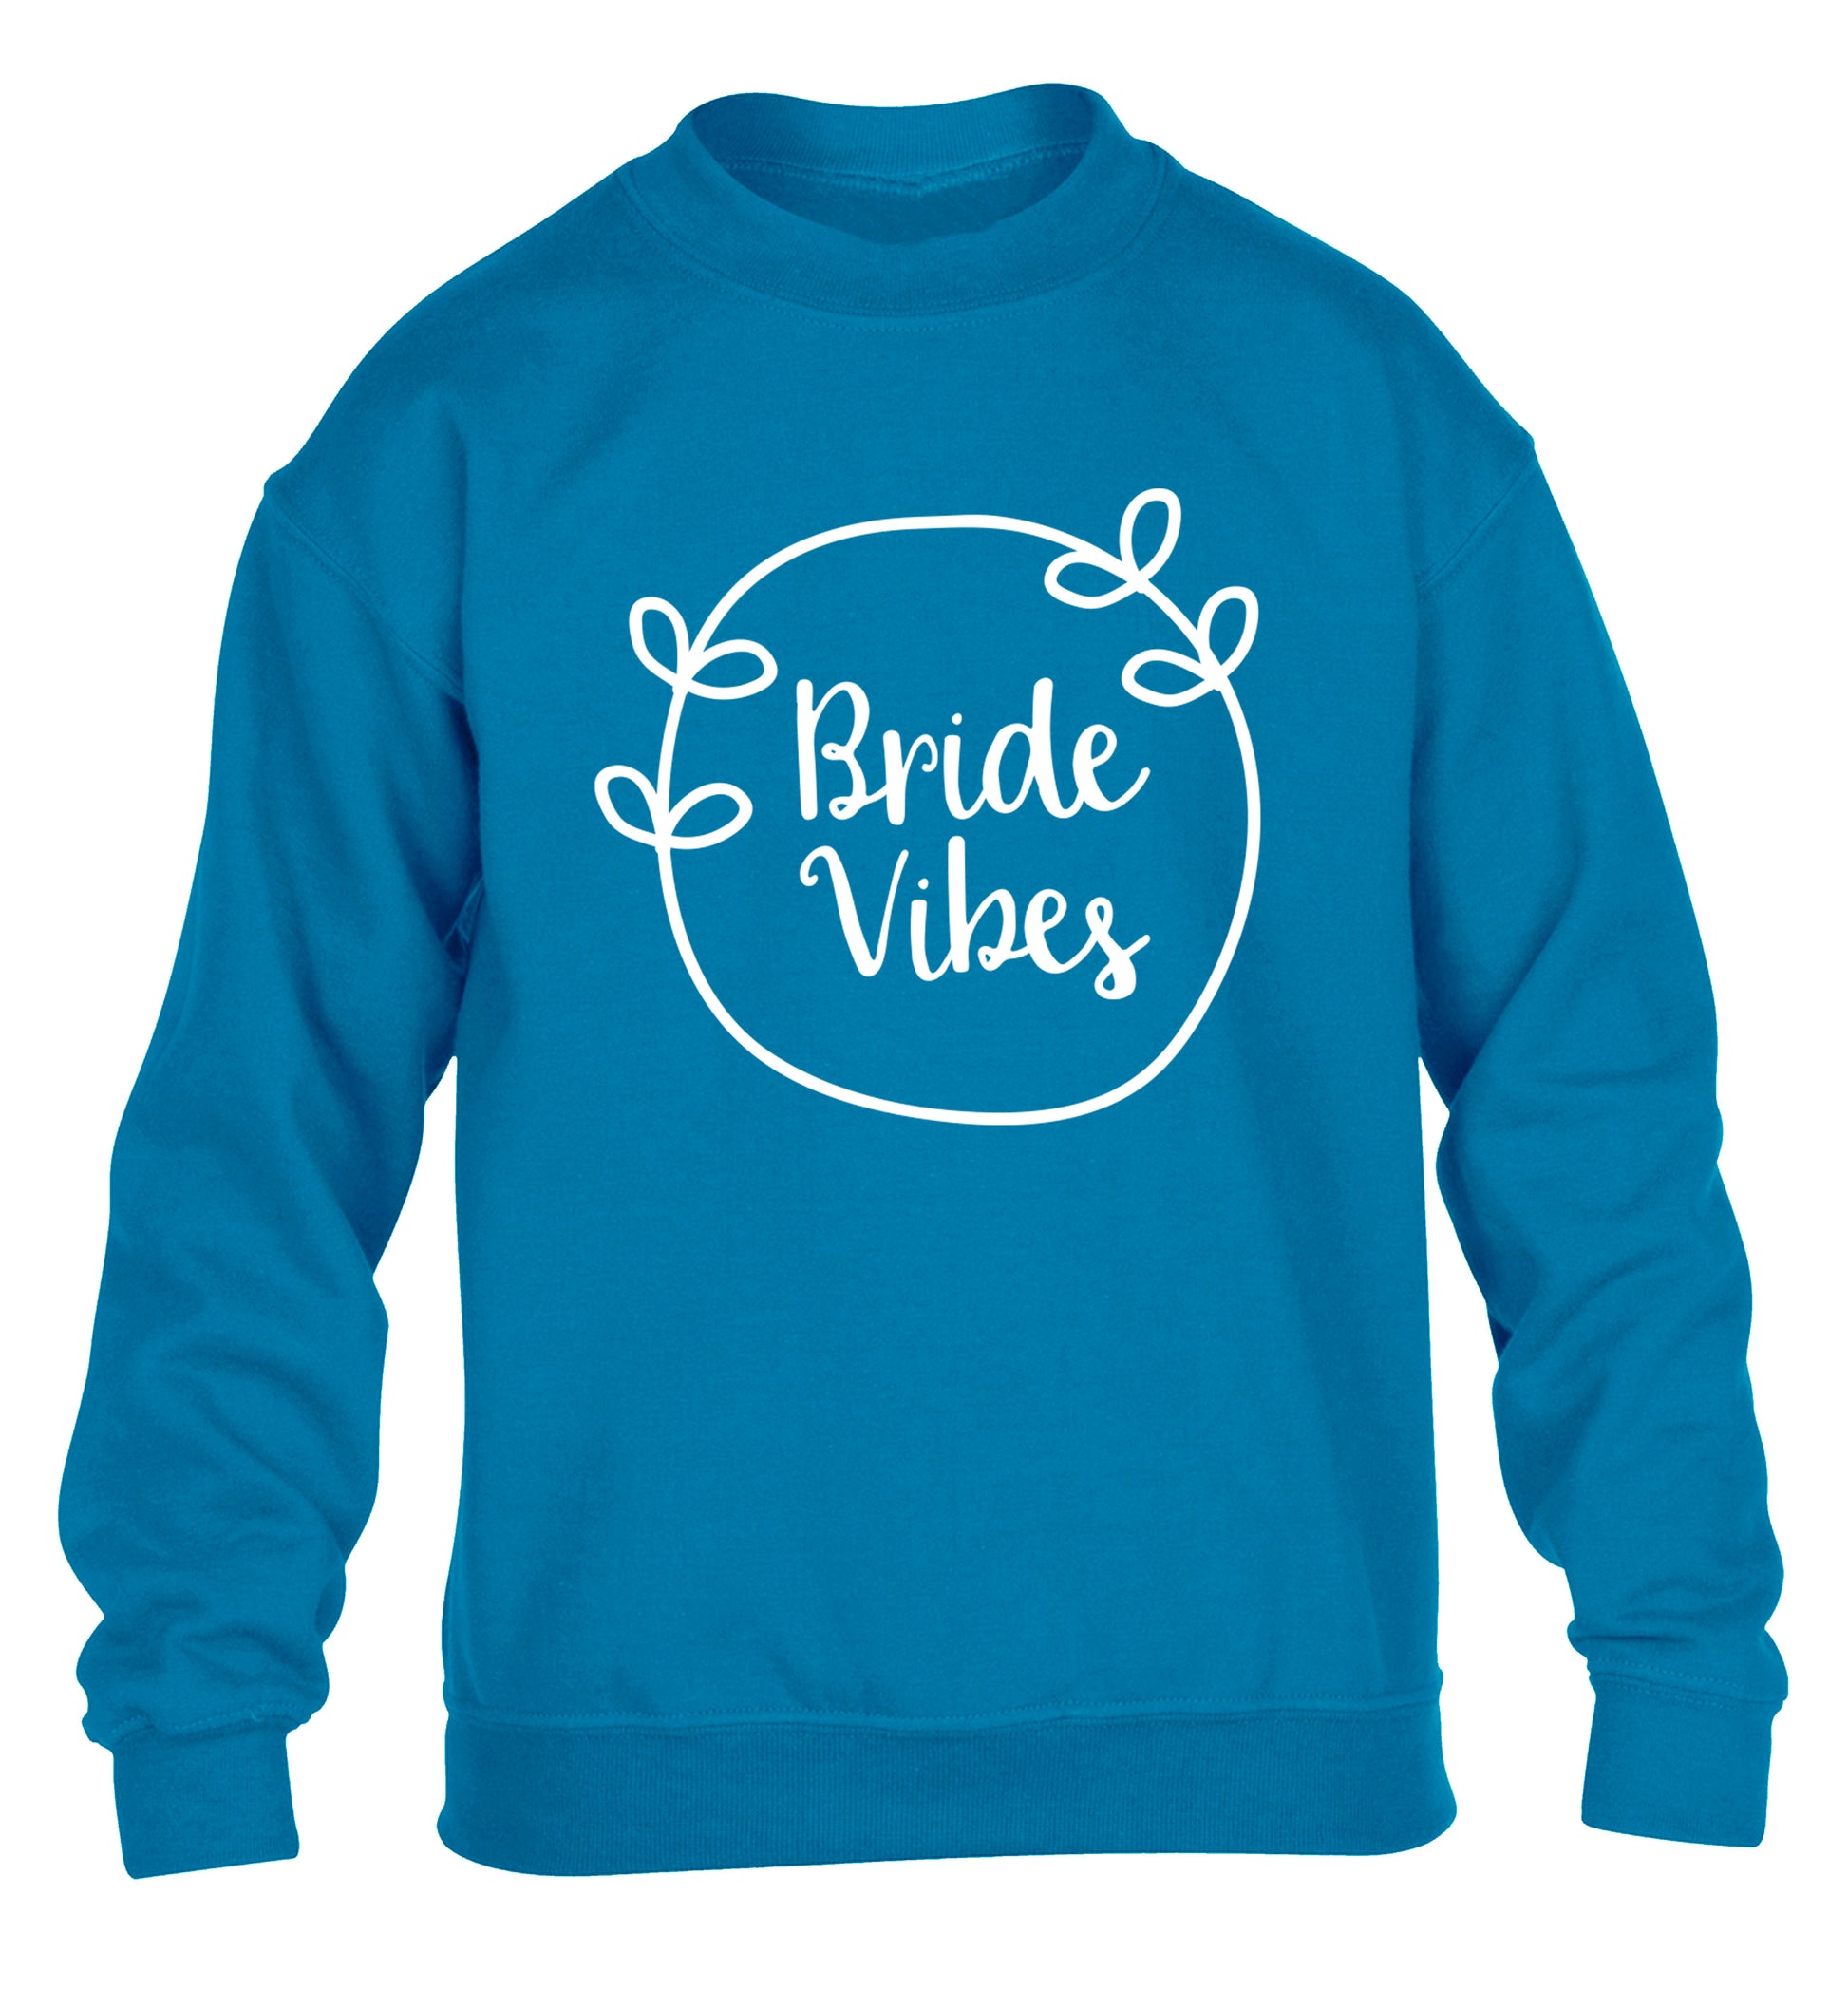 Bride Vibes children's blue sweater 12-13 Years